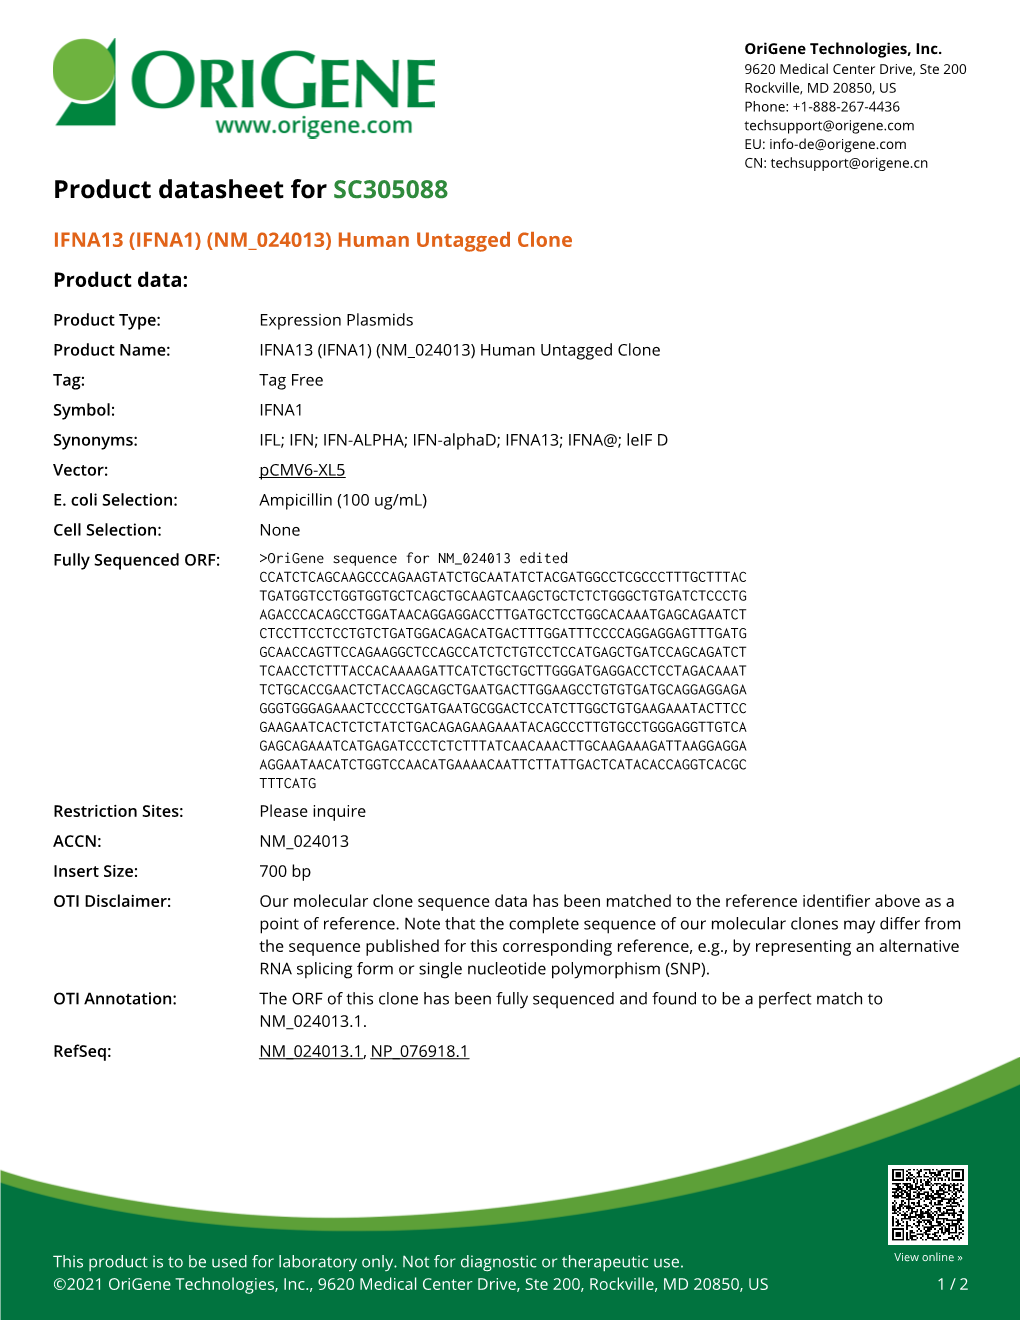 IFNA13 (IFNA1) (NM 024013) Human Untagged Clone Product Data